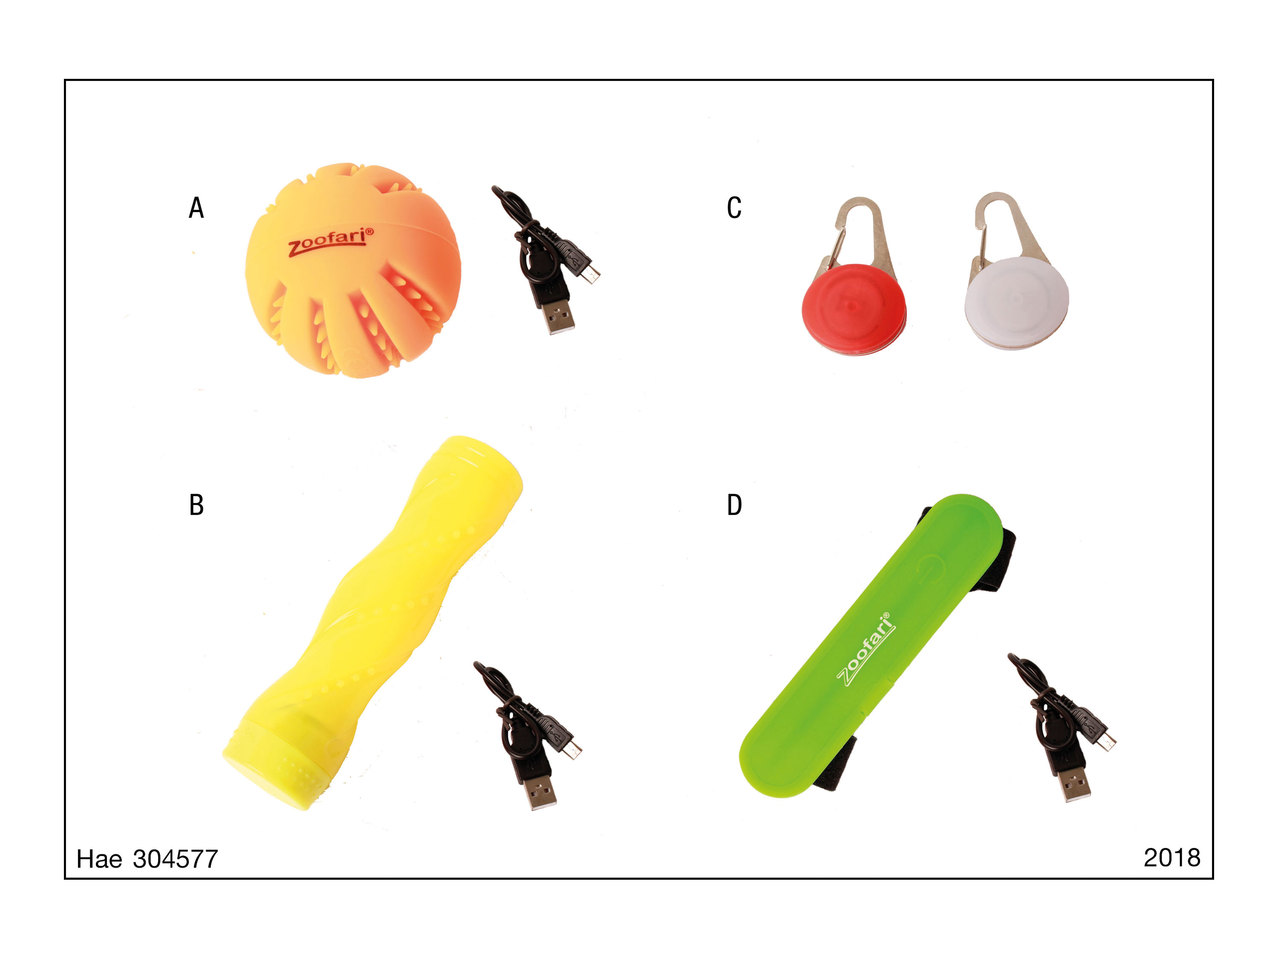 Zoofari LED Dog Toys or Accessories1